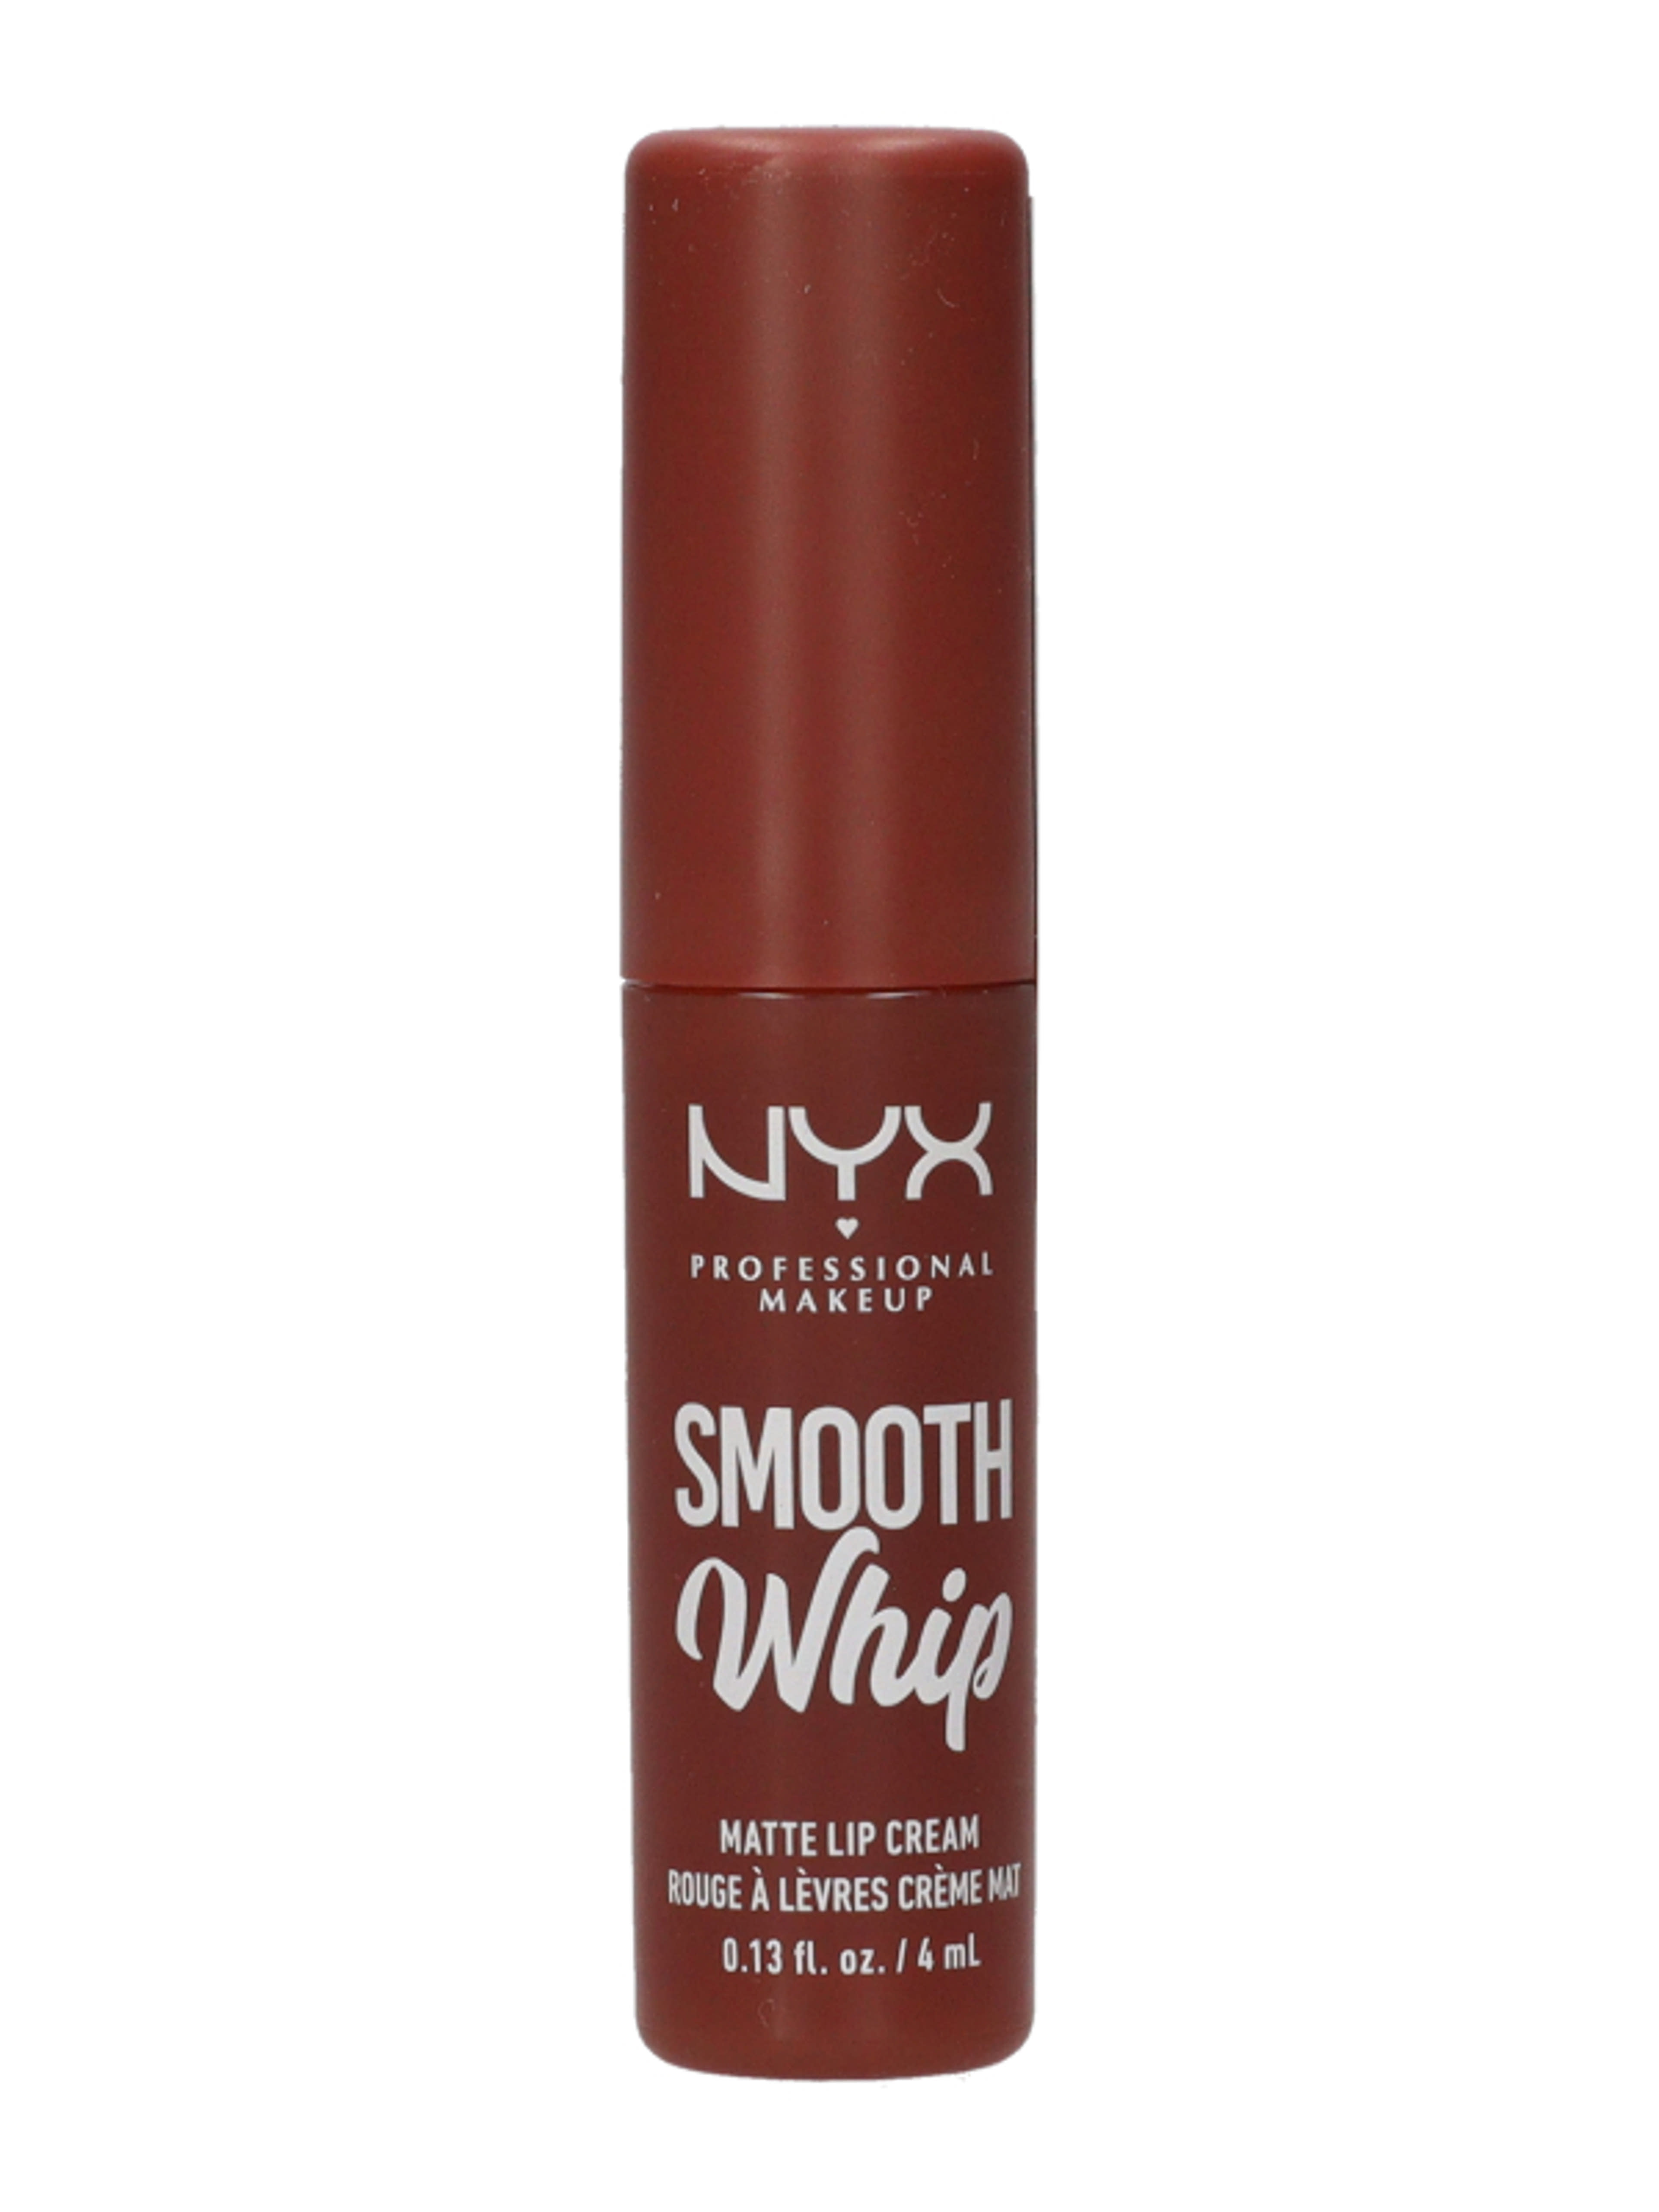 NYX Professional Makeup Smooth Whip Matte Lip Cream folyékony matt rúzs /Teddy Fluff - 1 db-1